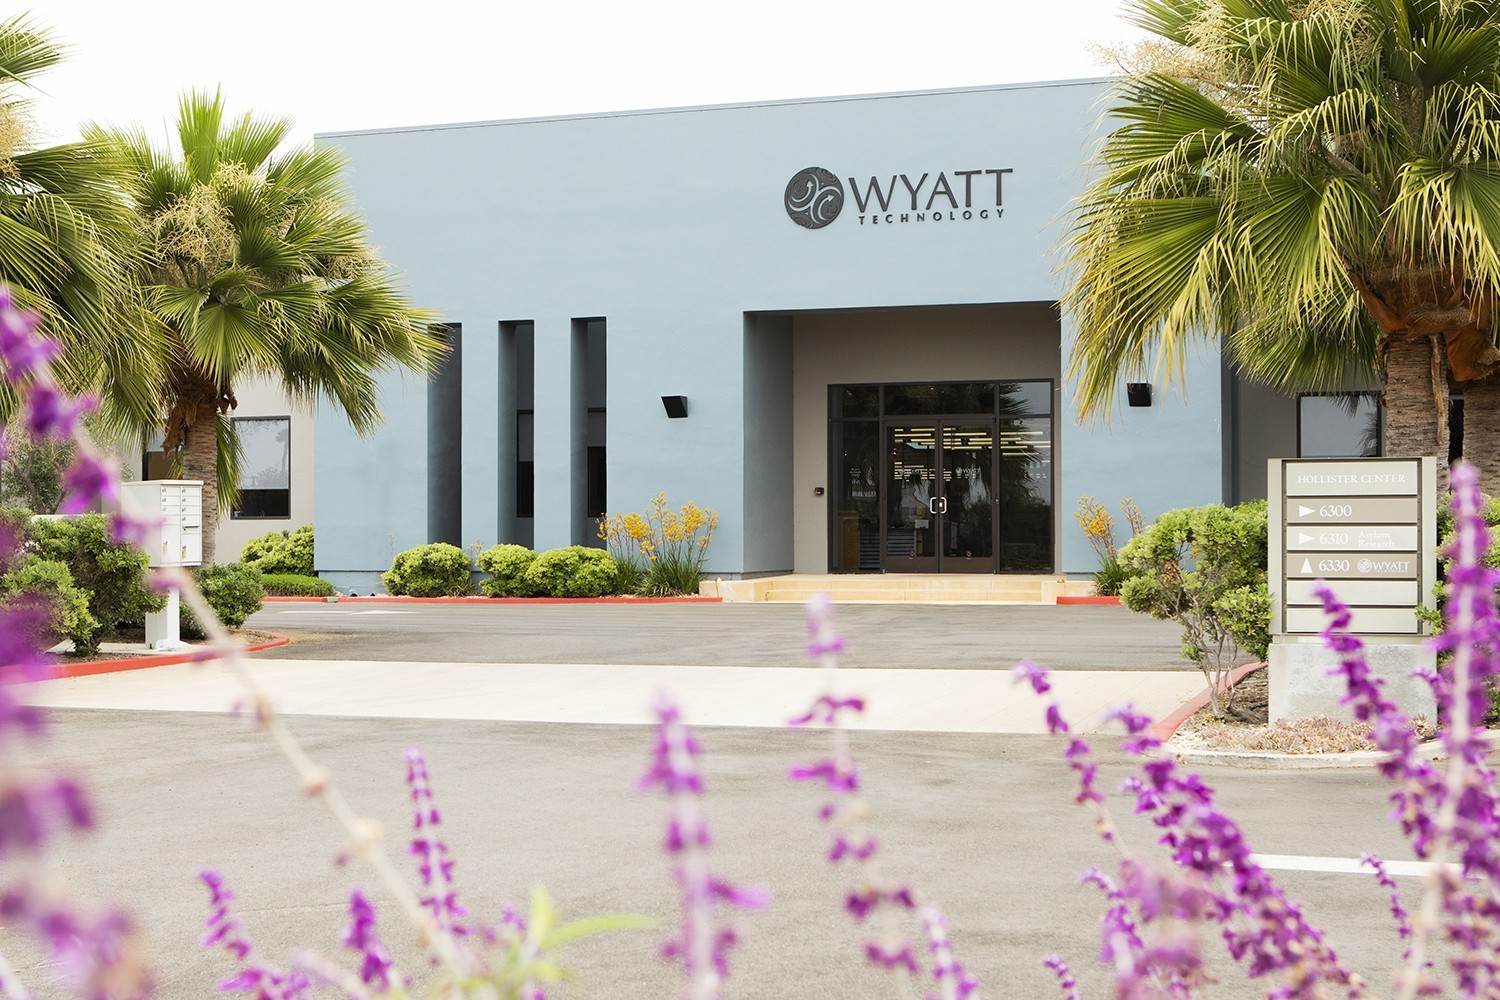 Wyatt Technology headquarters located in Santa Barbara, CA. 